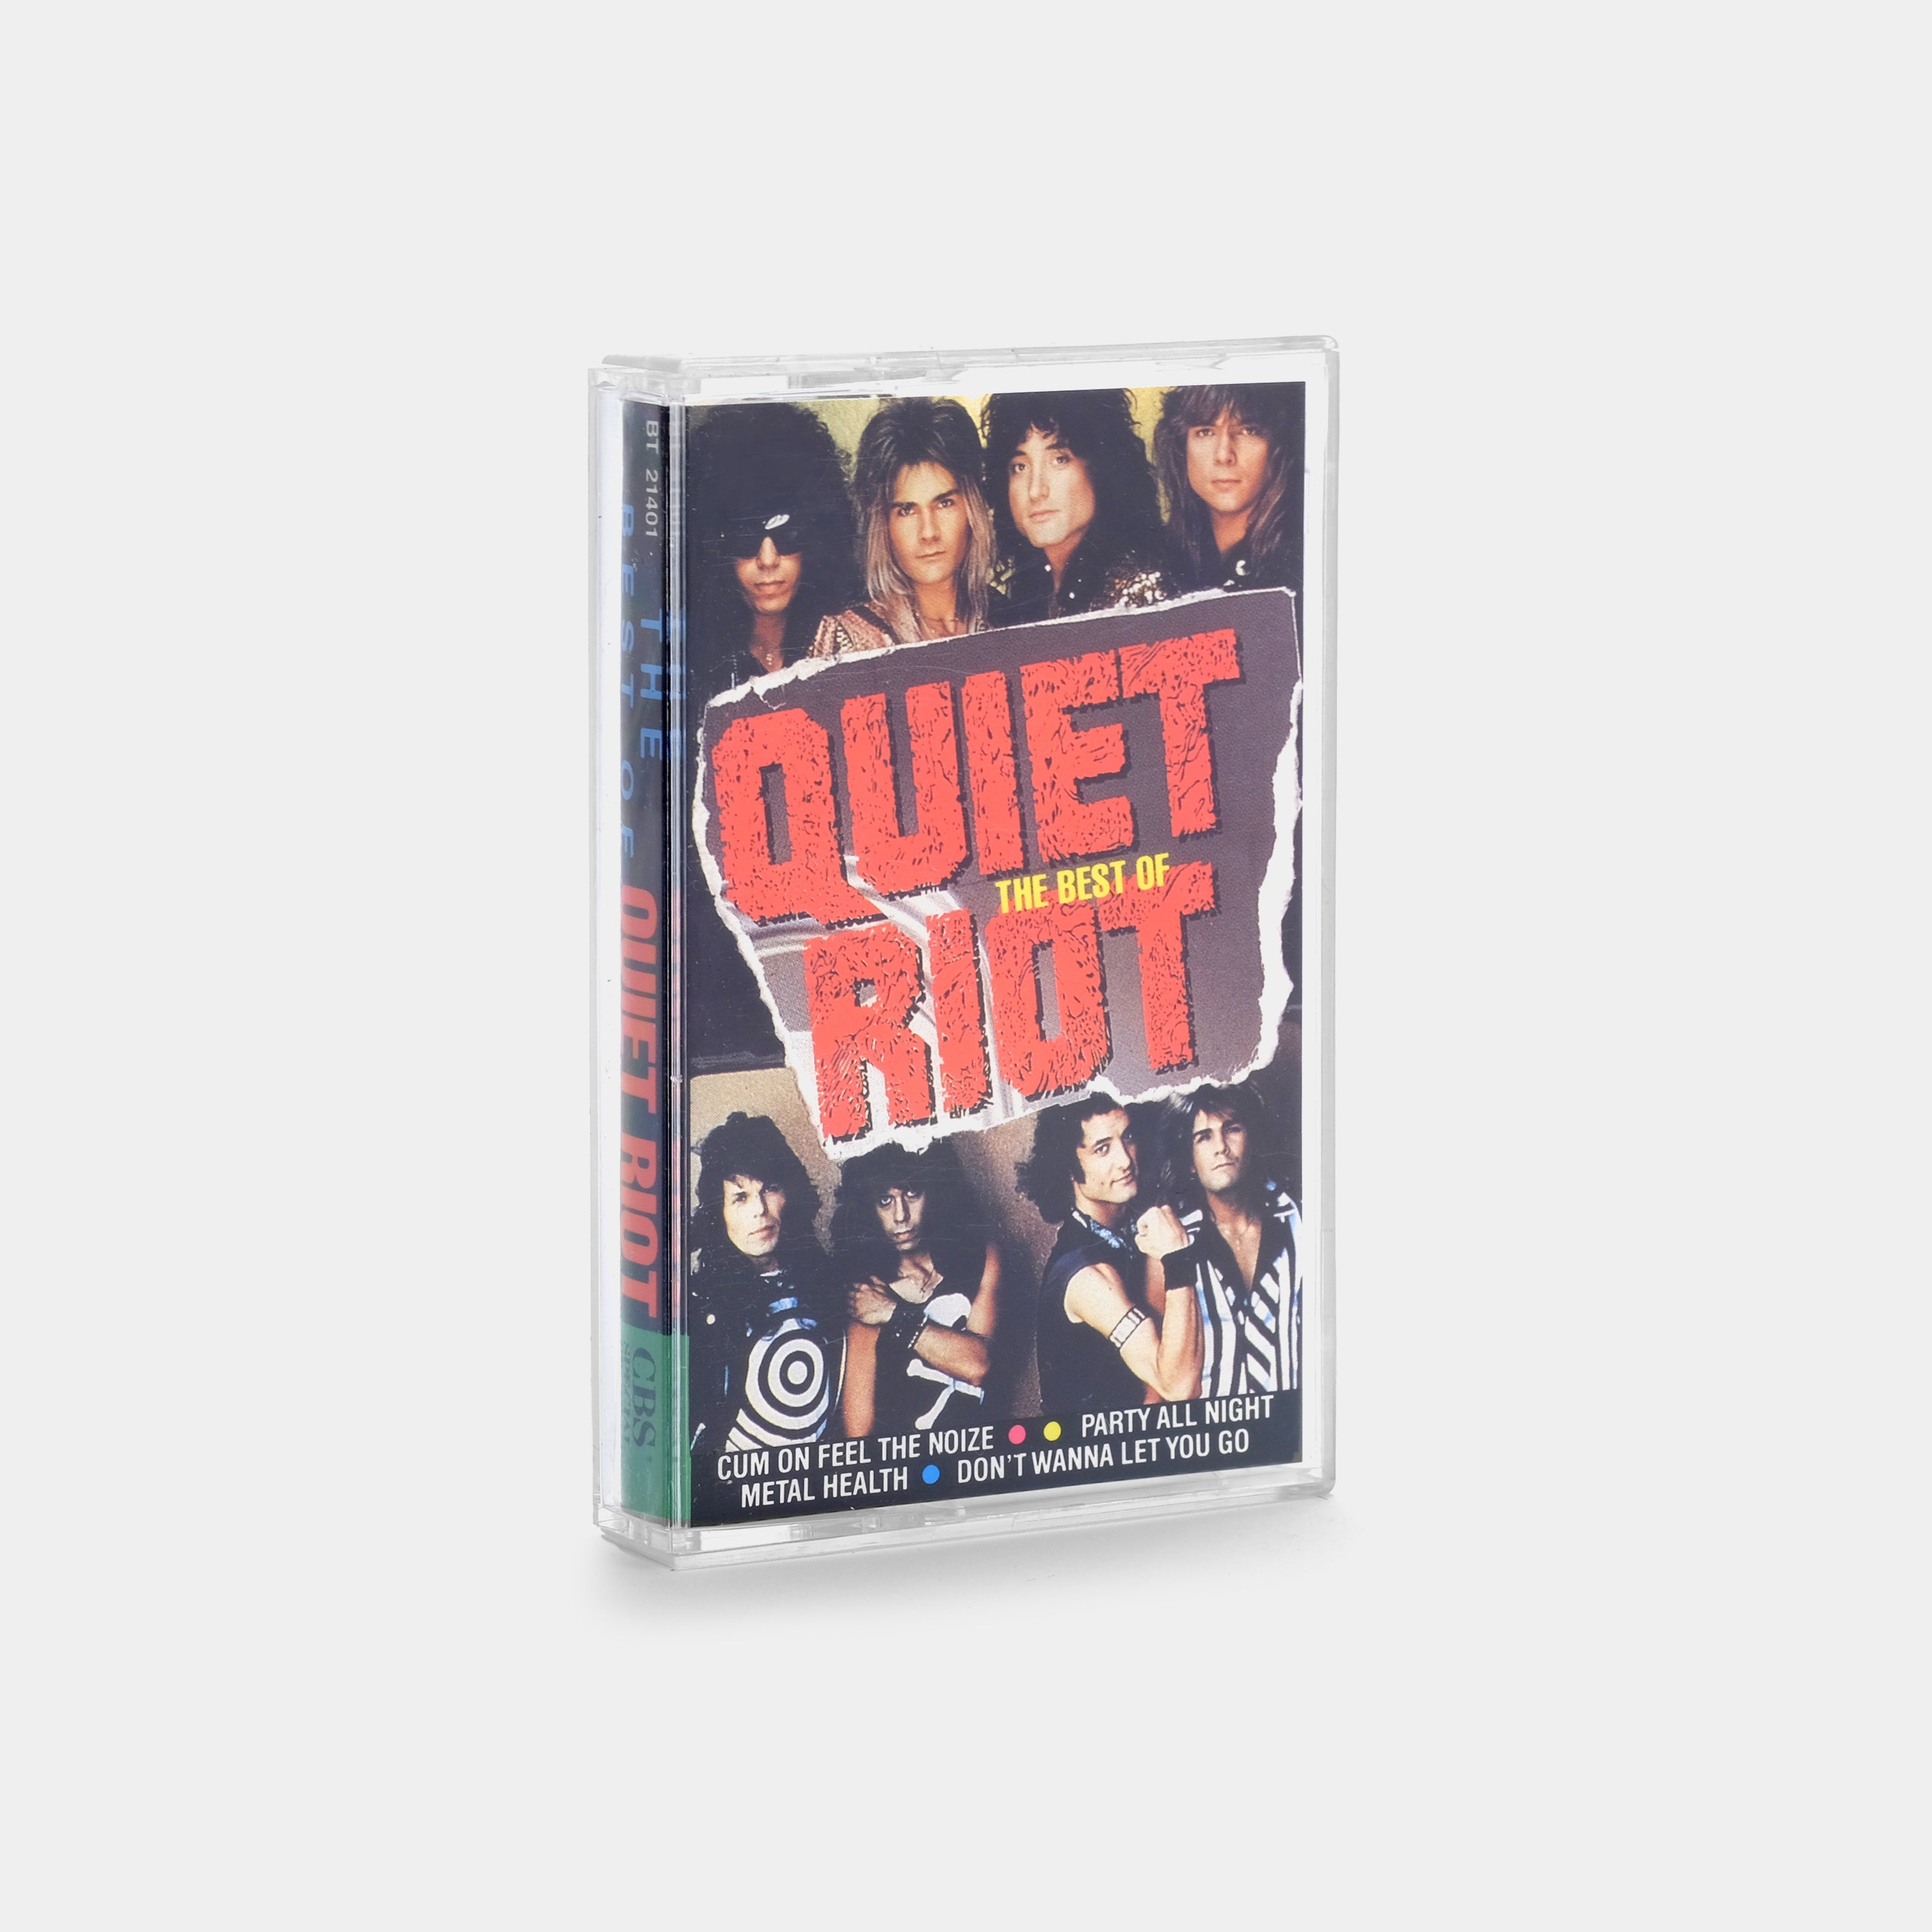 Quiet Riot - The Best Of Quiet Riot Cassette Tape